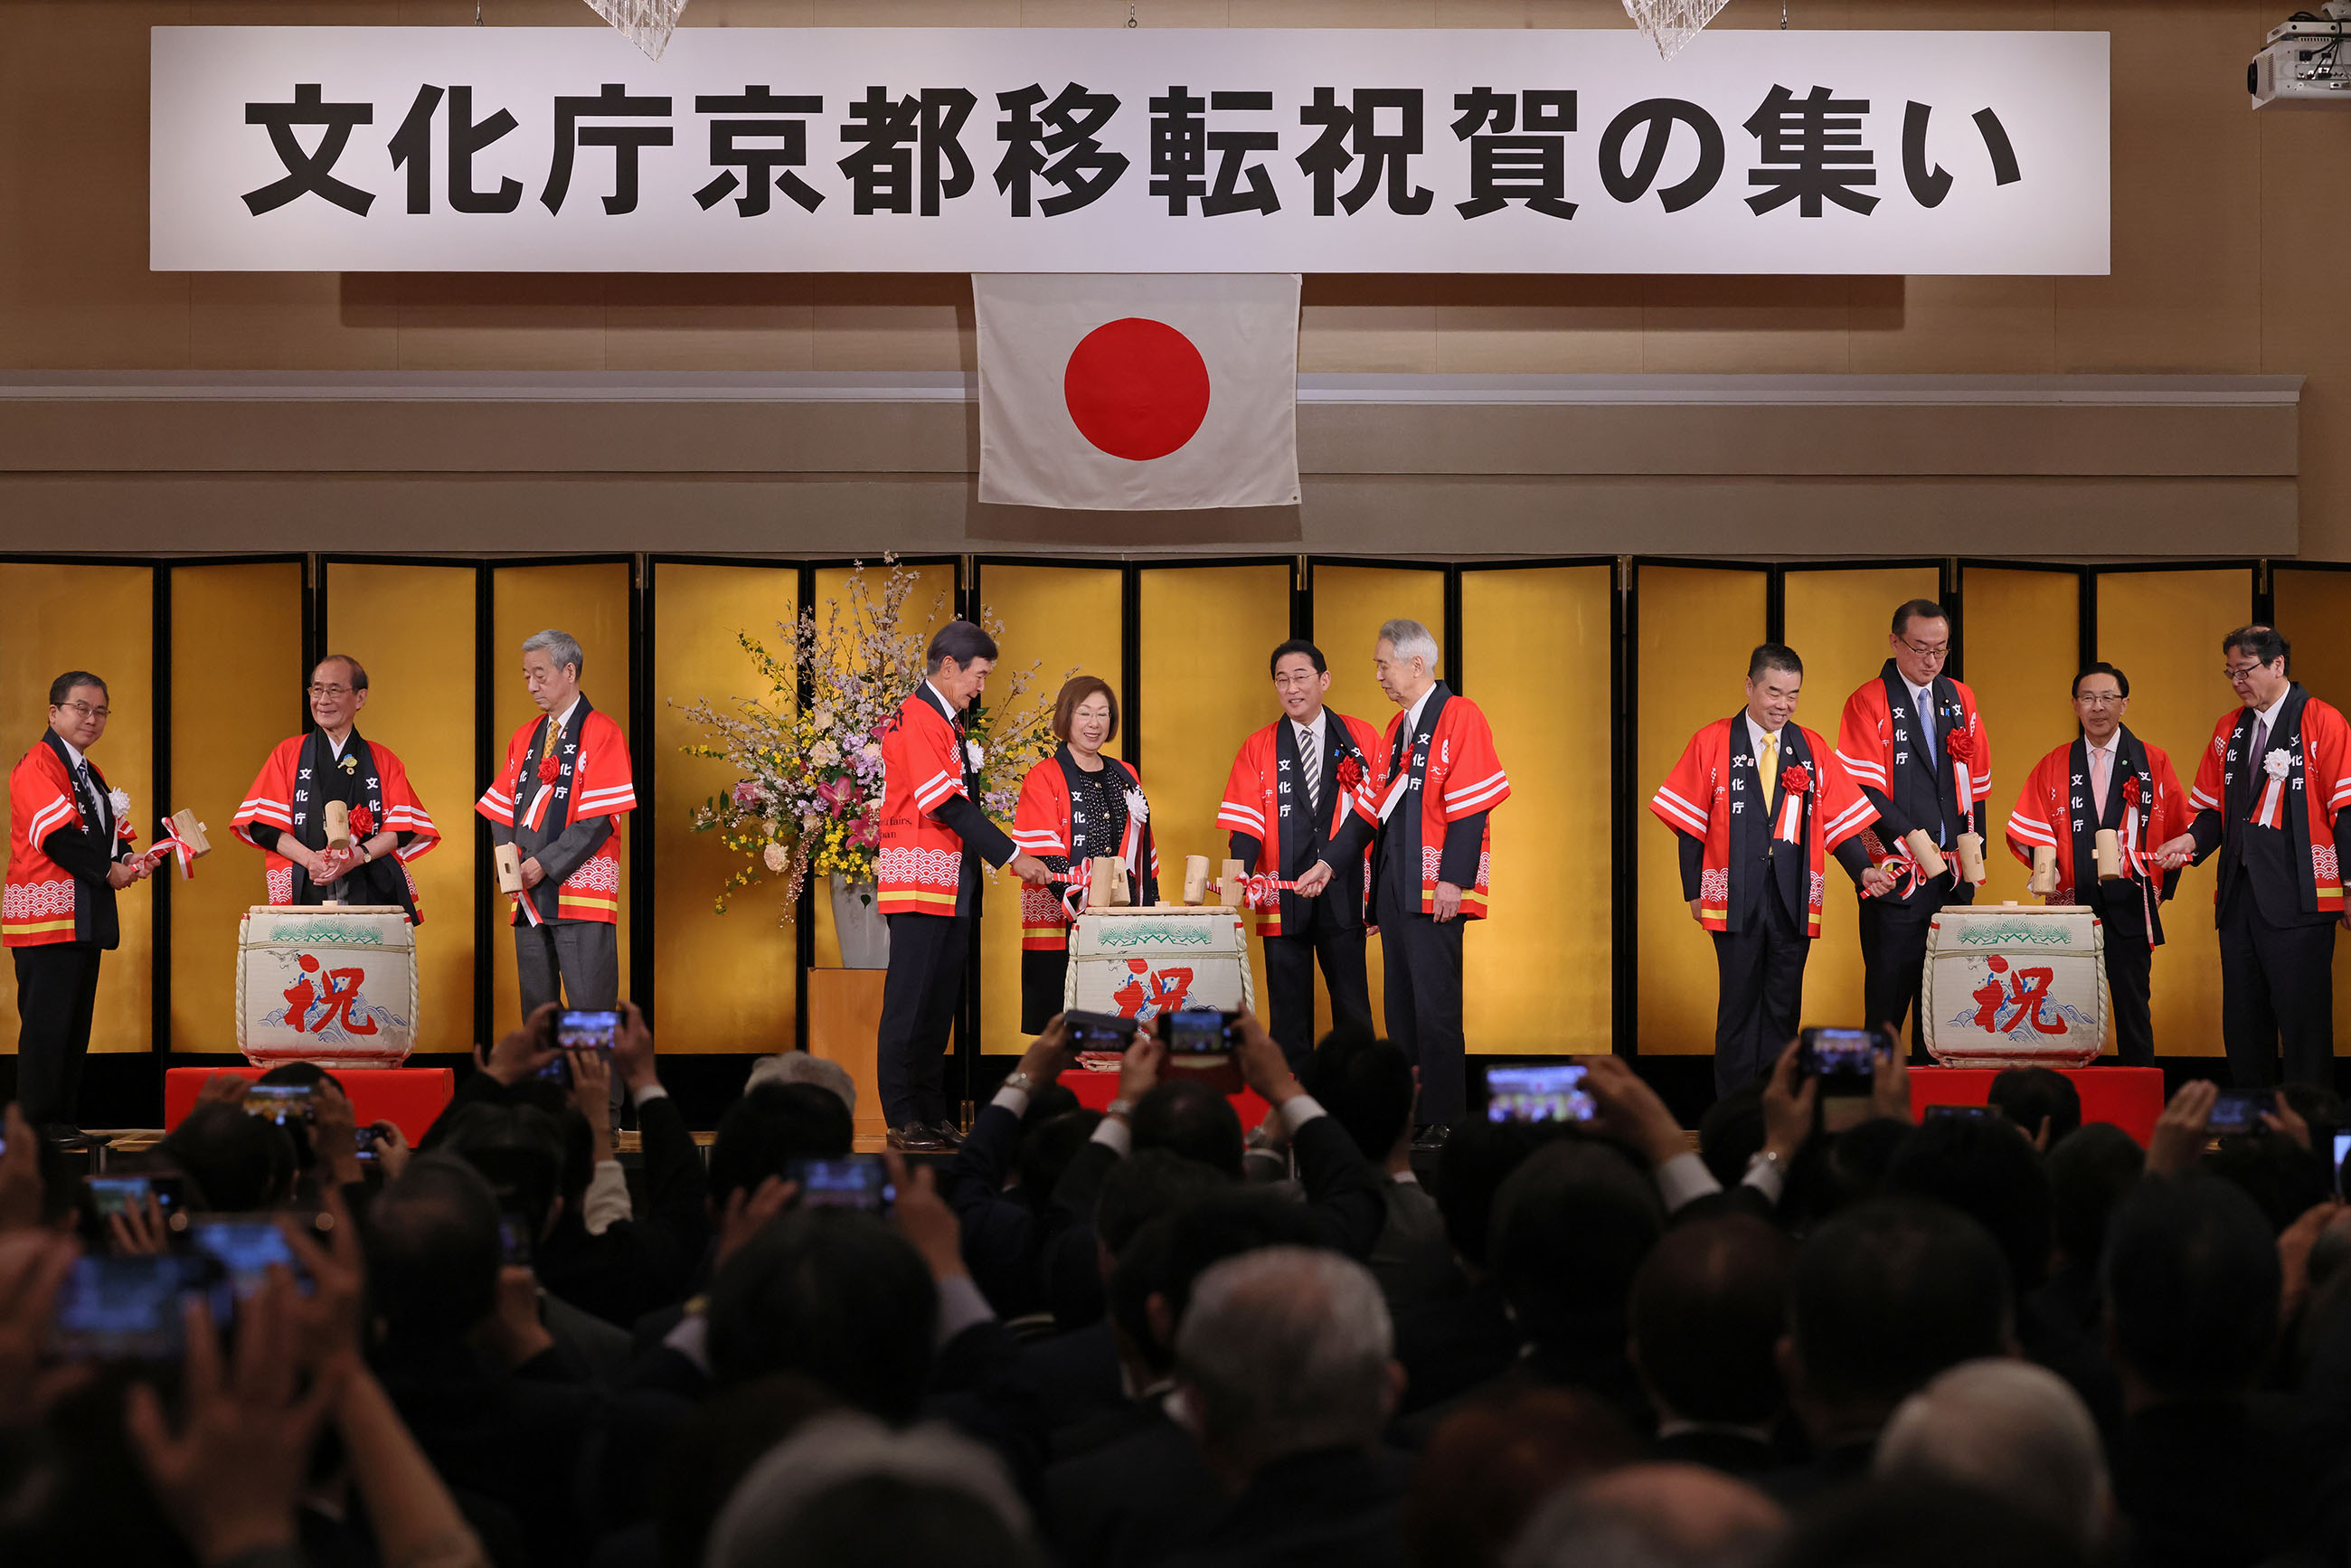 Prime Minister Kishida opening a cask of sake at the ceremony (1)